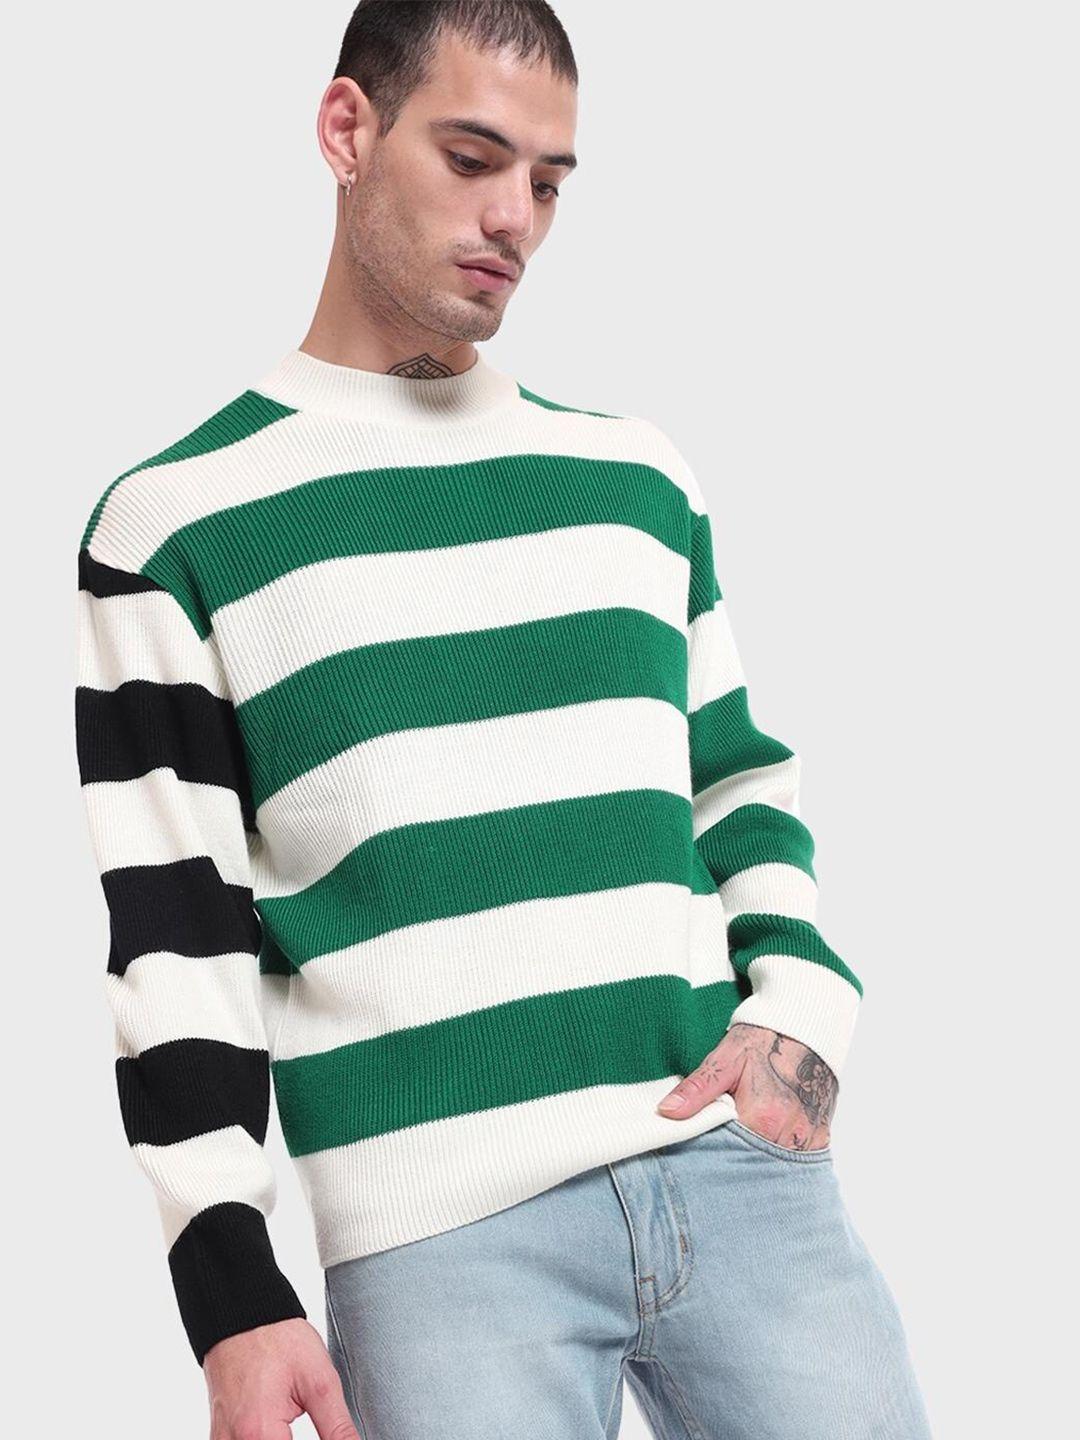 bewakoof-men-rolling-hills-striped-oversized-sweater